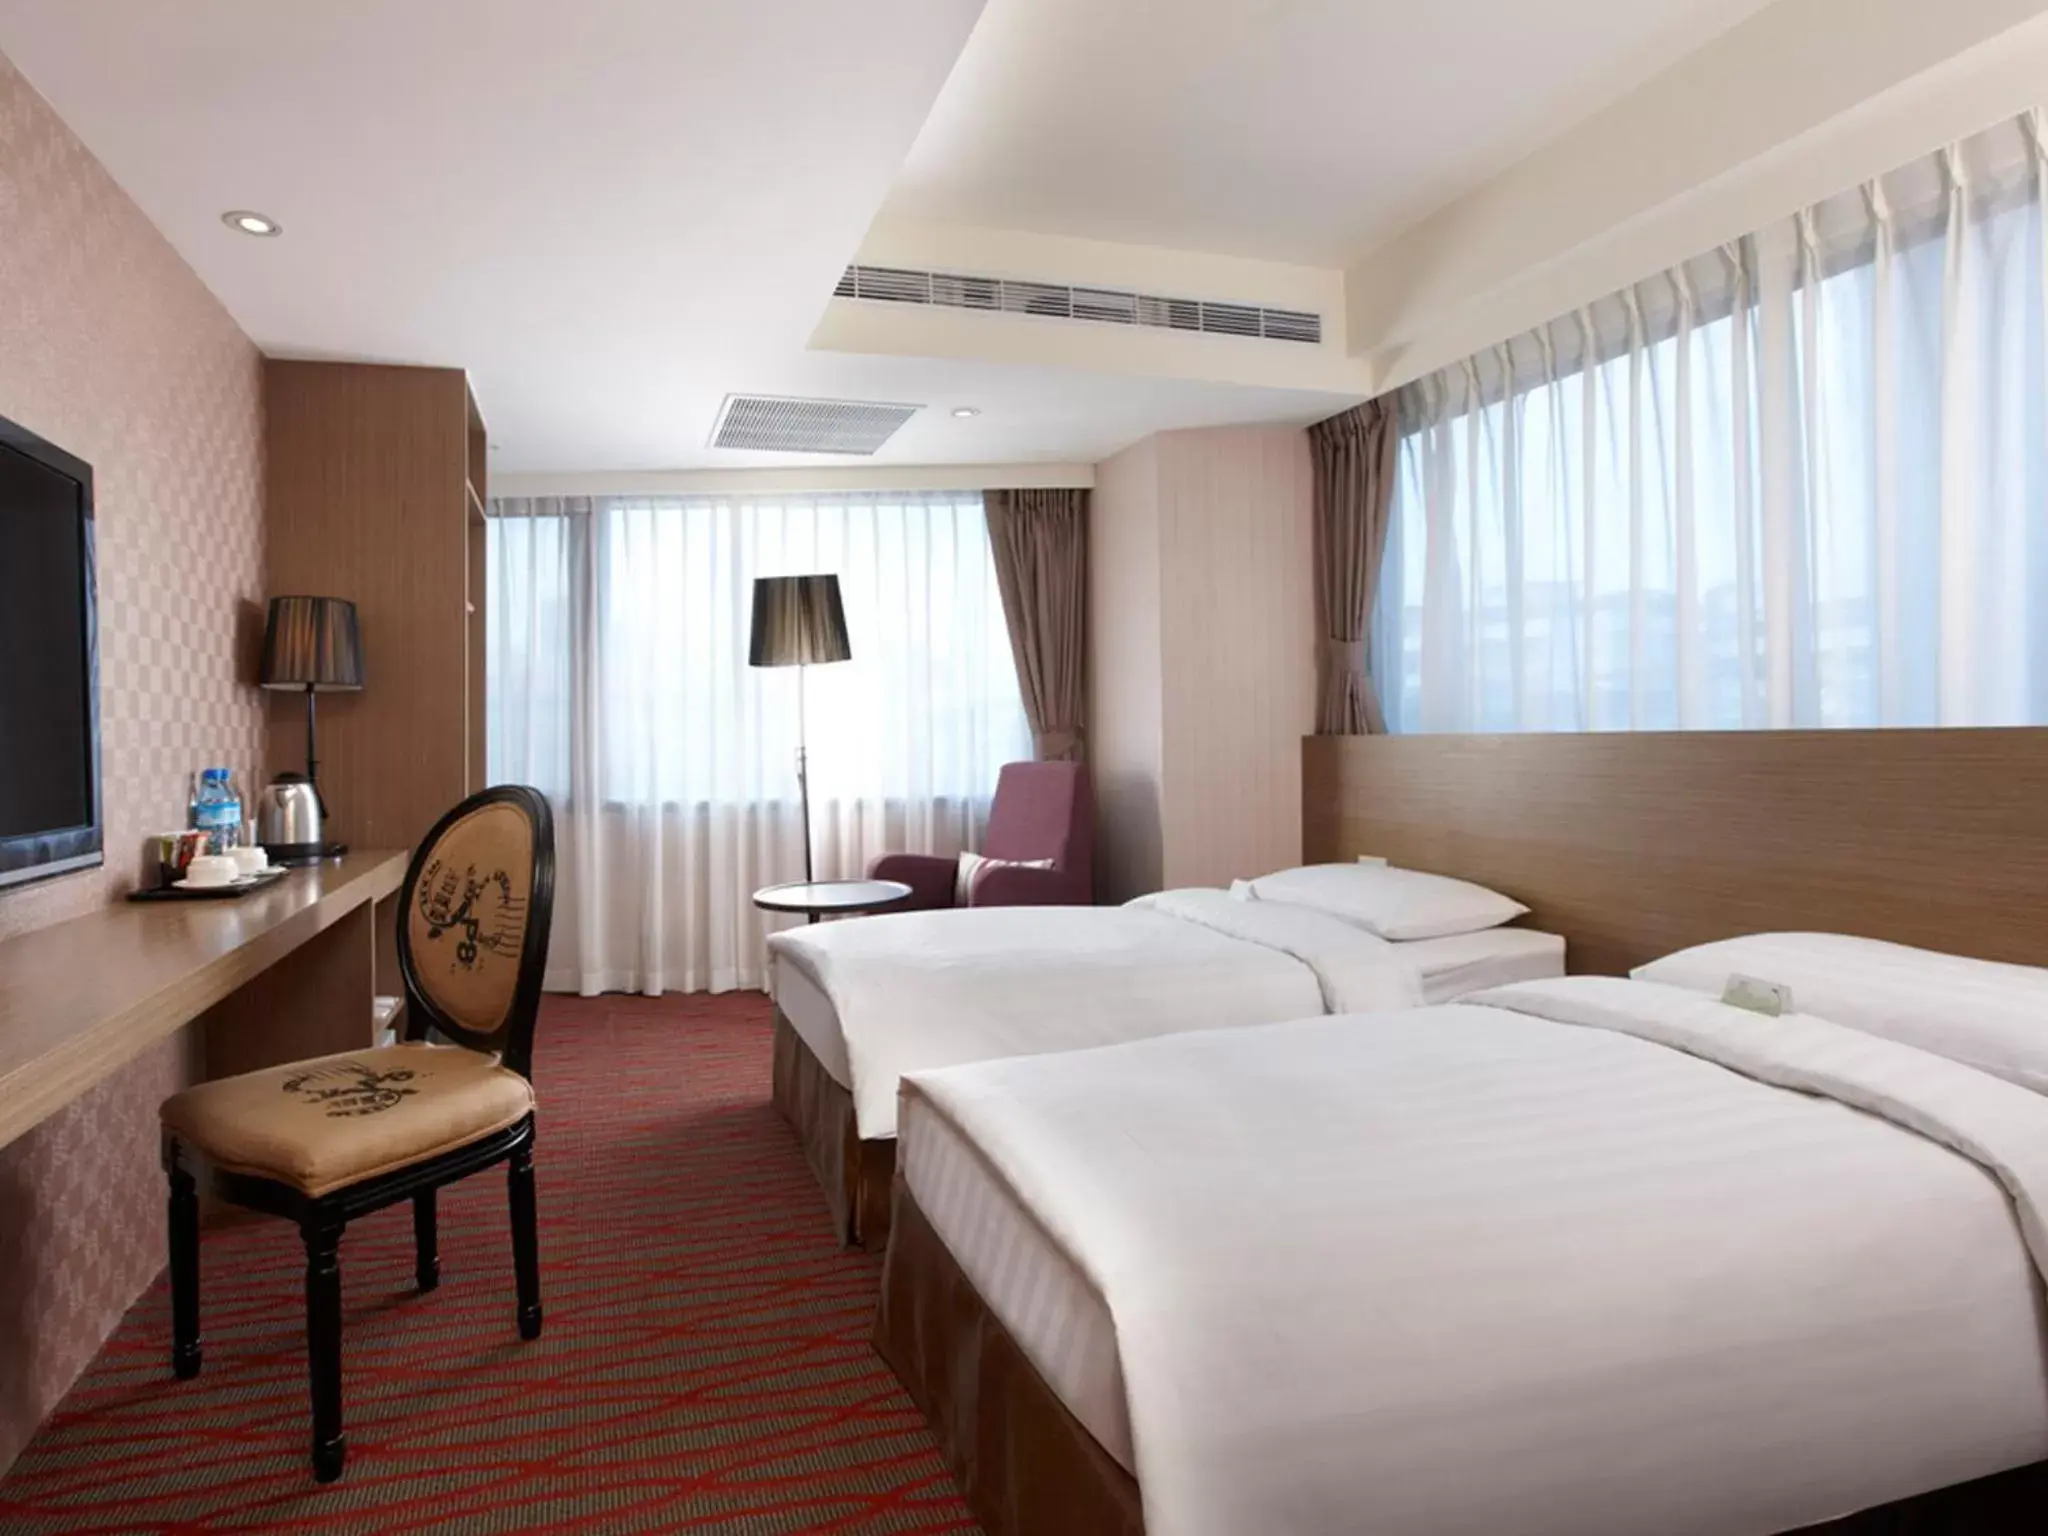 Bedroom in RF Hotel - Zhongxiao